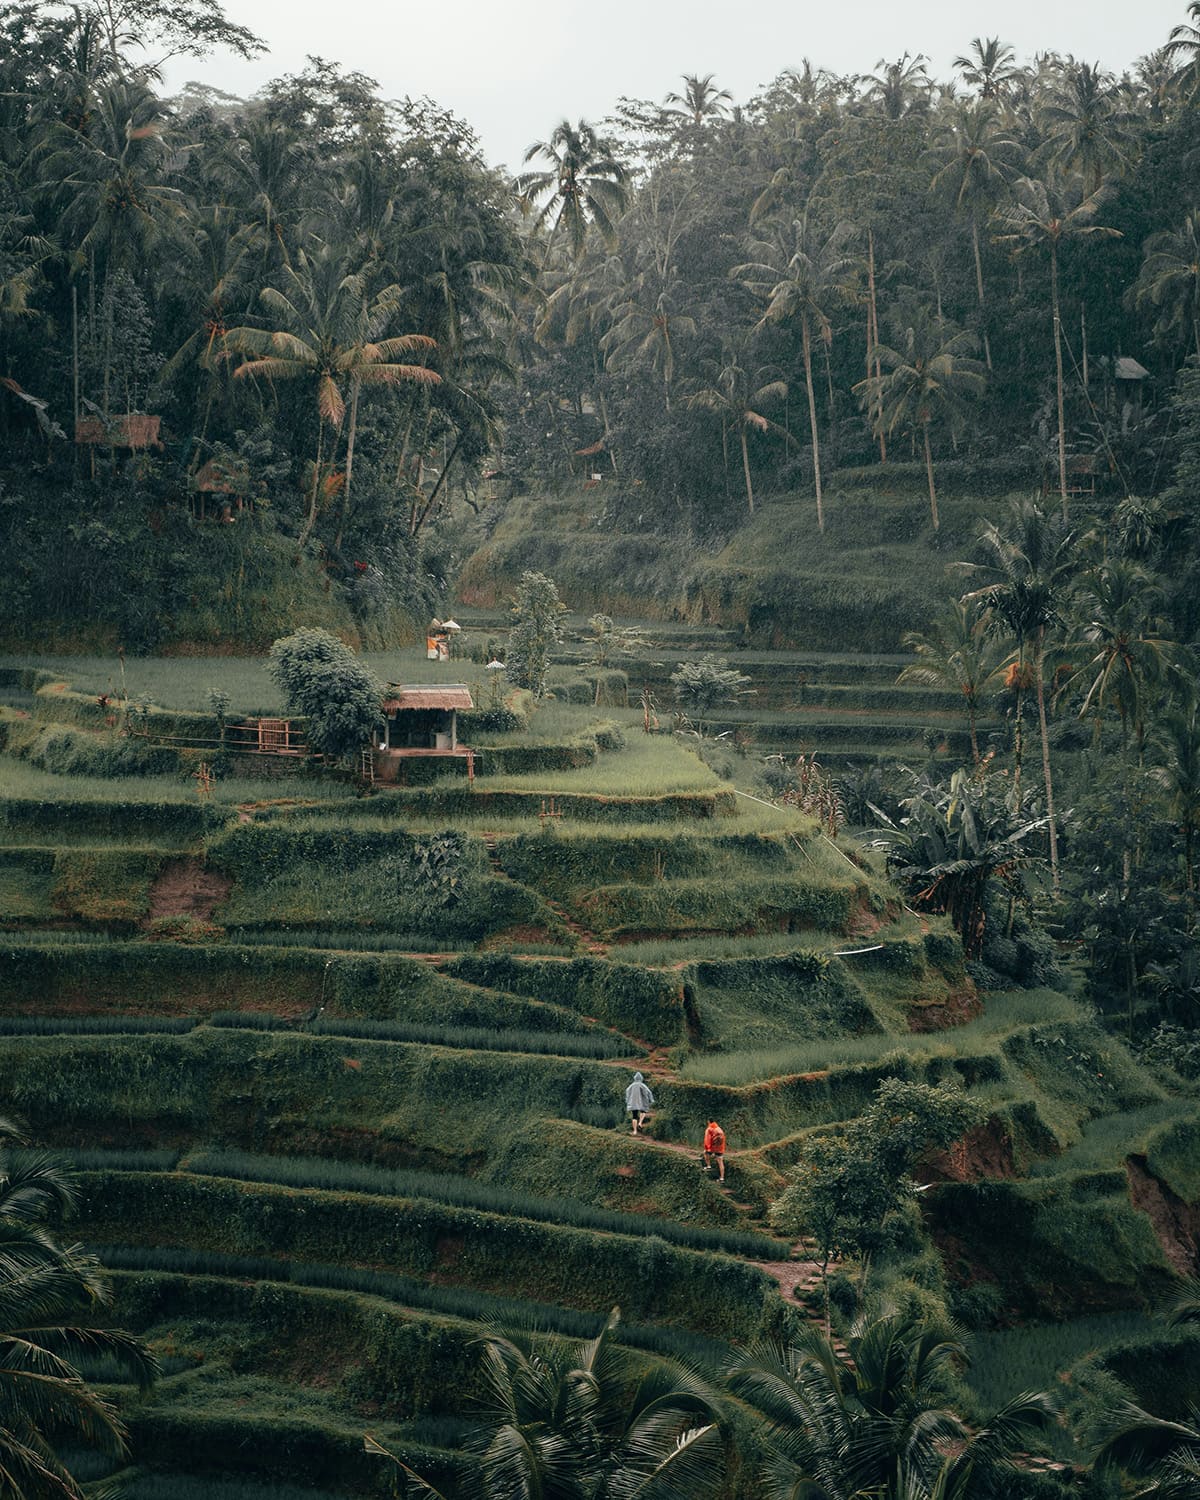 Bali Rice Fields: 11 Best Rice Terraces You Should Visit